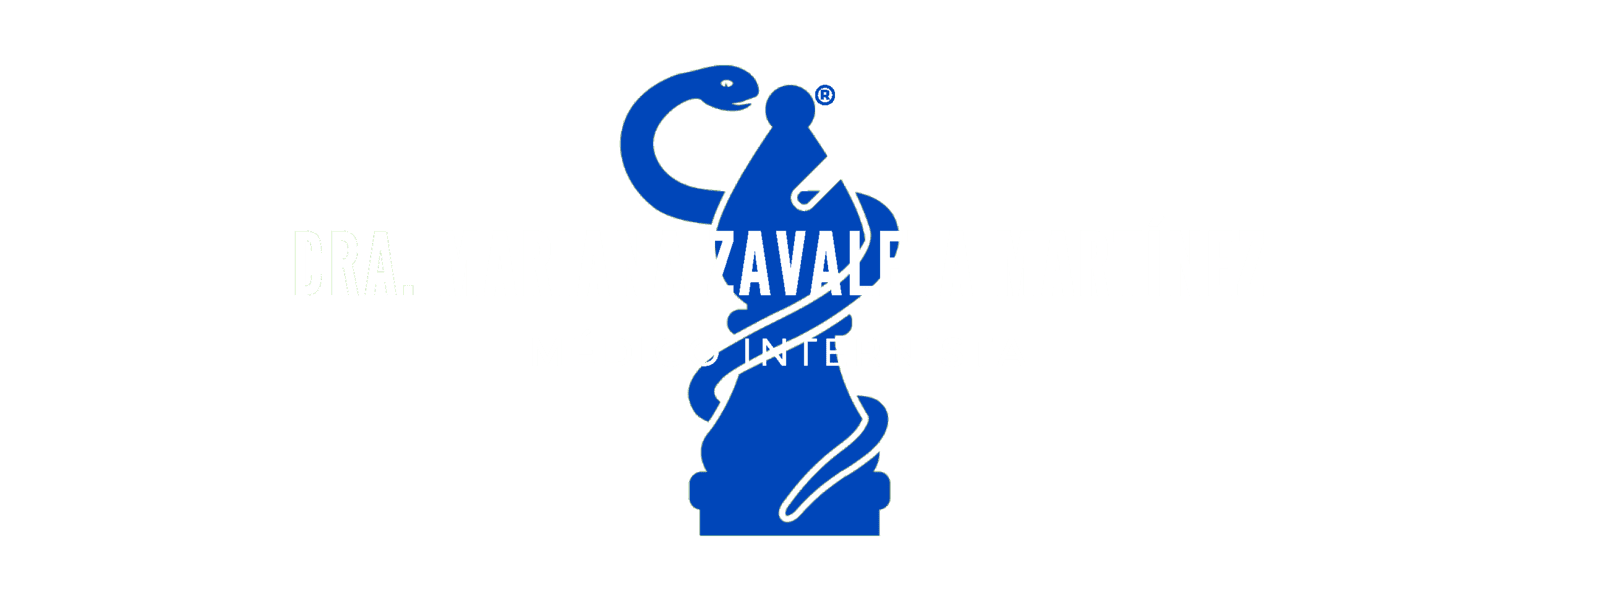 Dra. Mariana Zavaleta Martínez